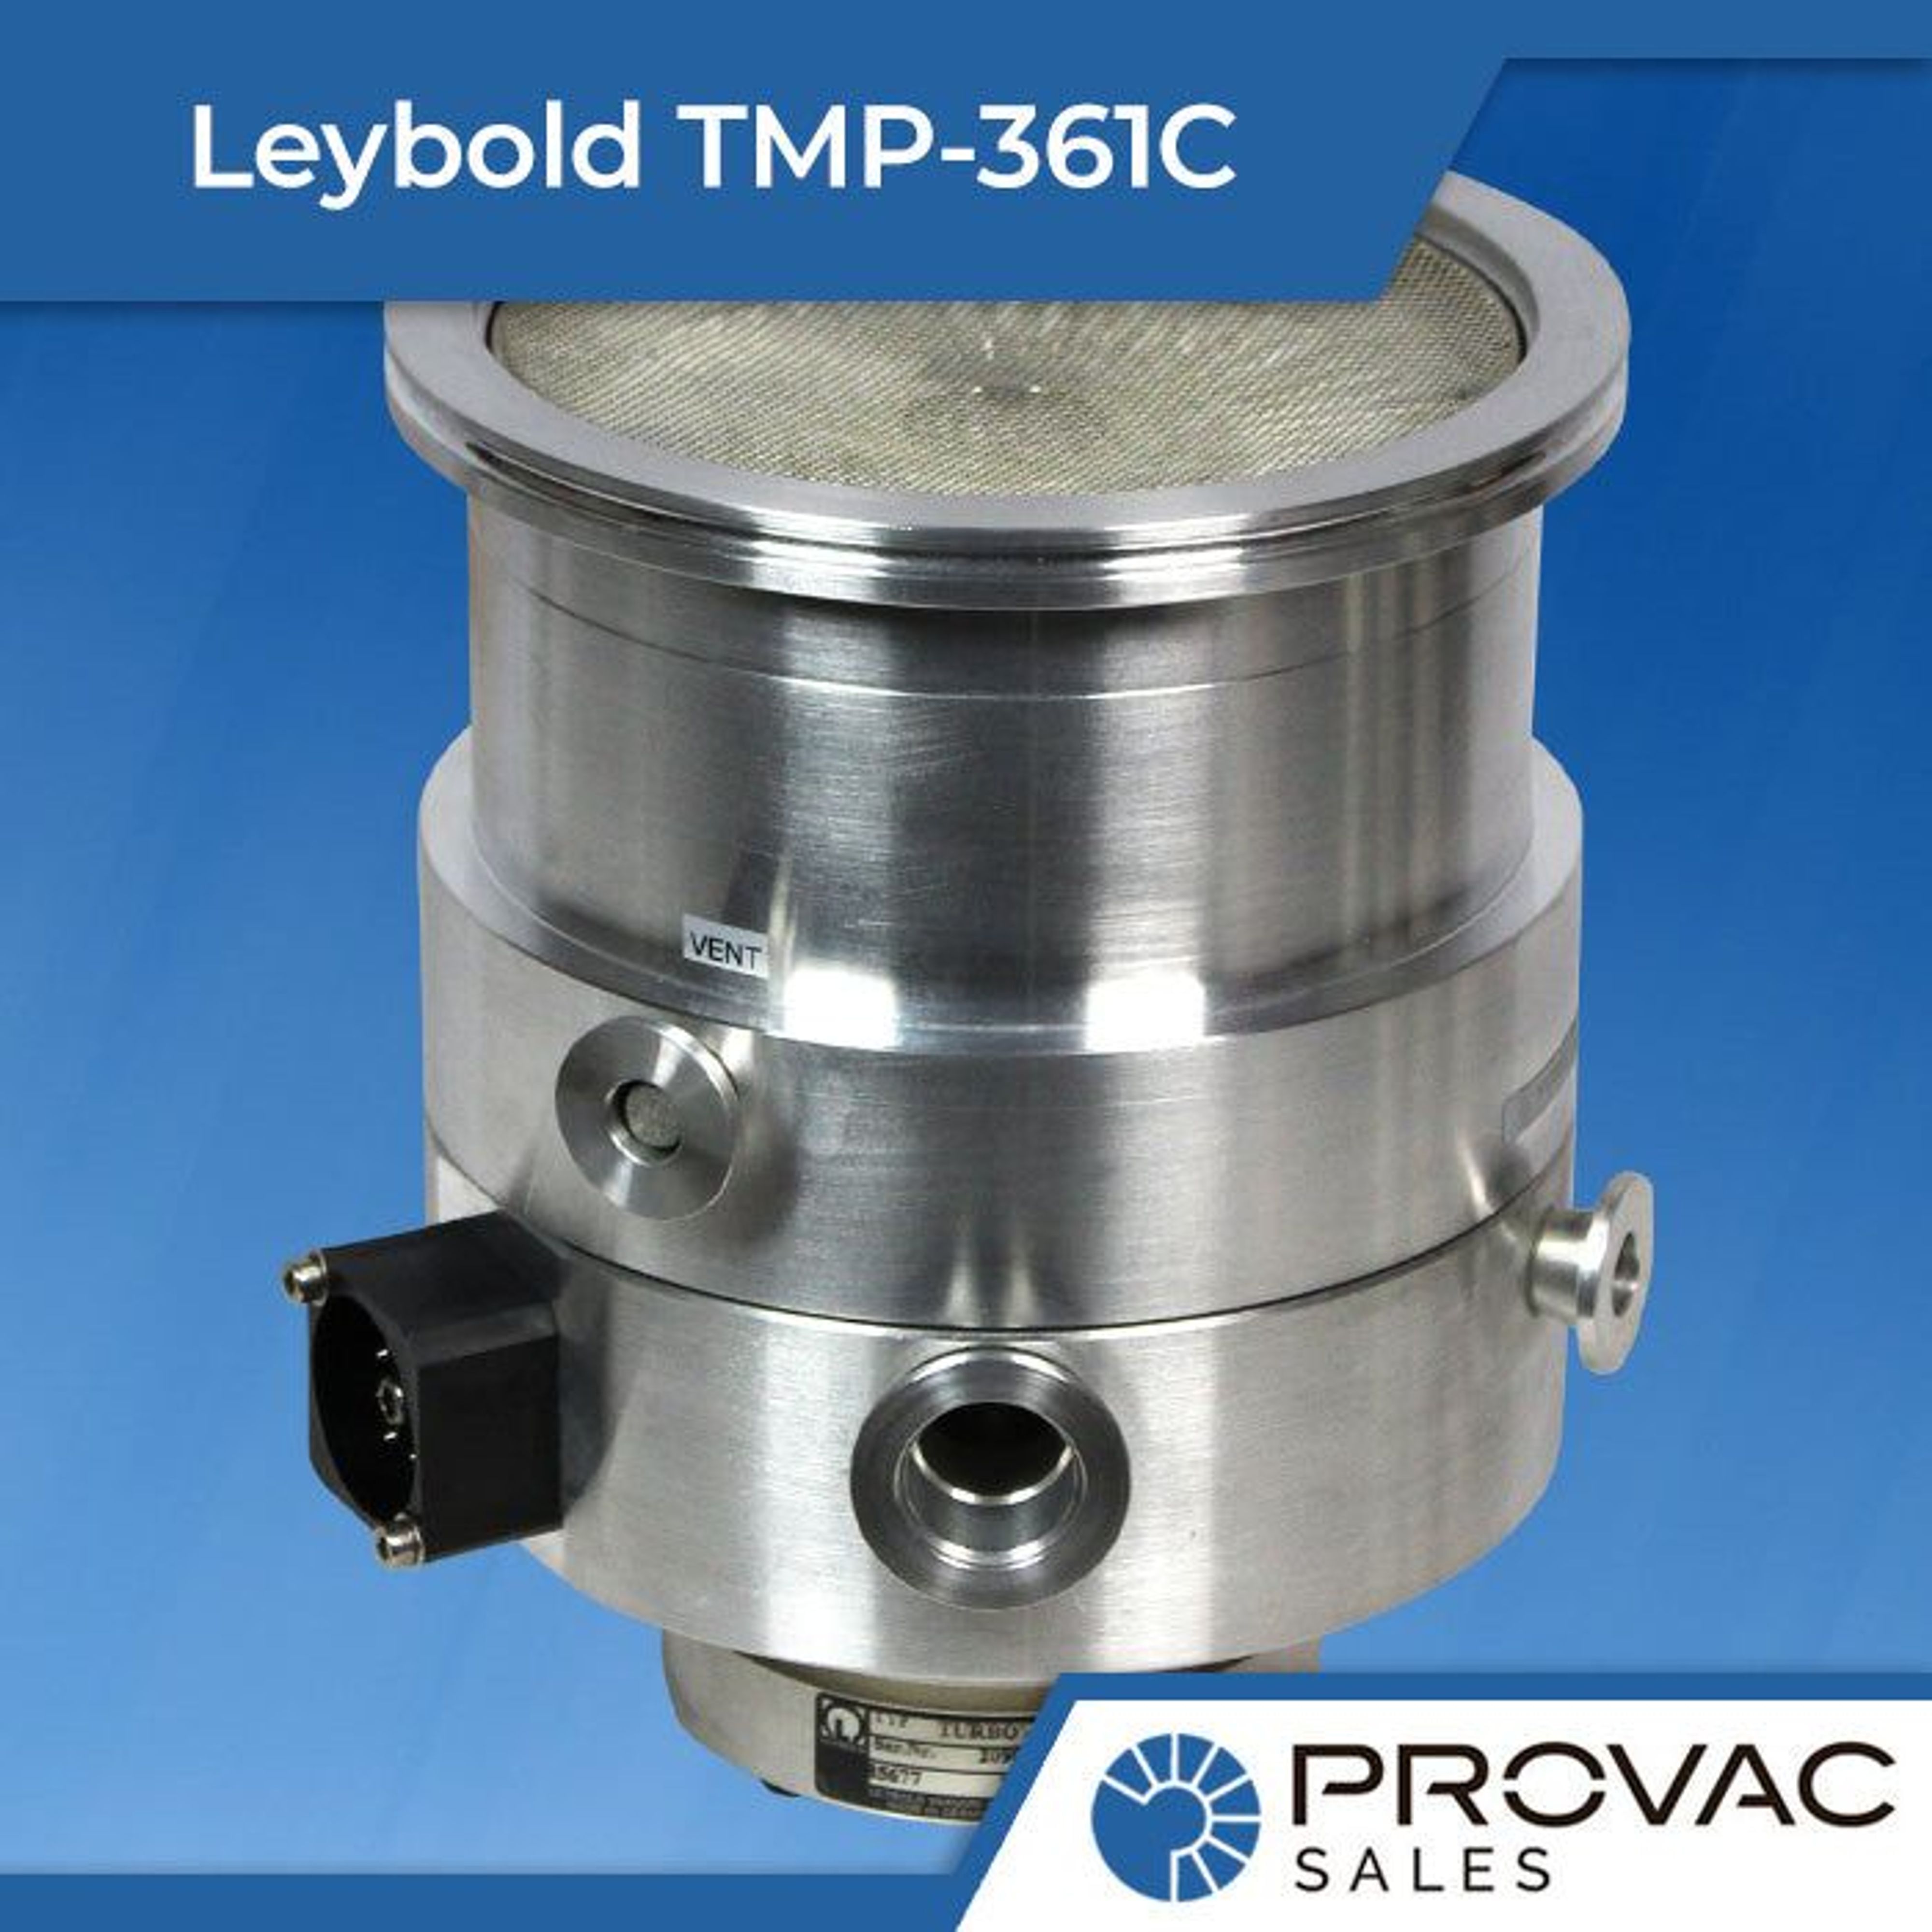 Product Spotlight: Leybold TMP-361(C) Turbo Pump Background